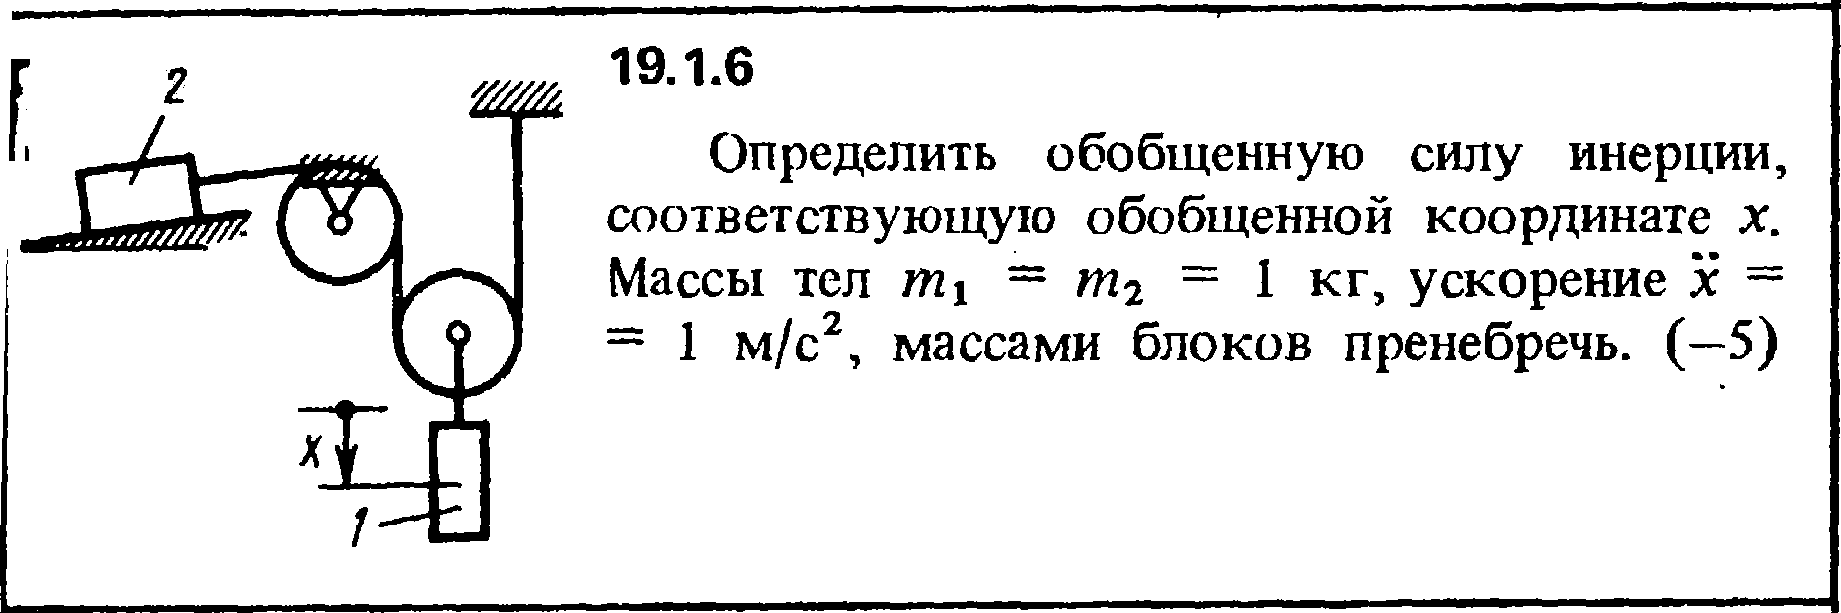 Решение 19.1.6 из сборника (решебника) Кепе О.Е. 1989 г